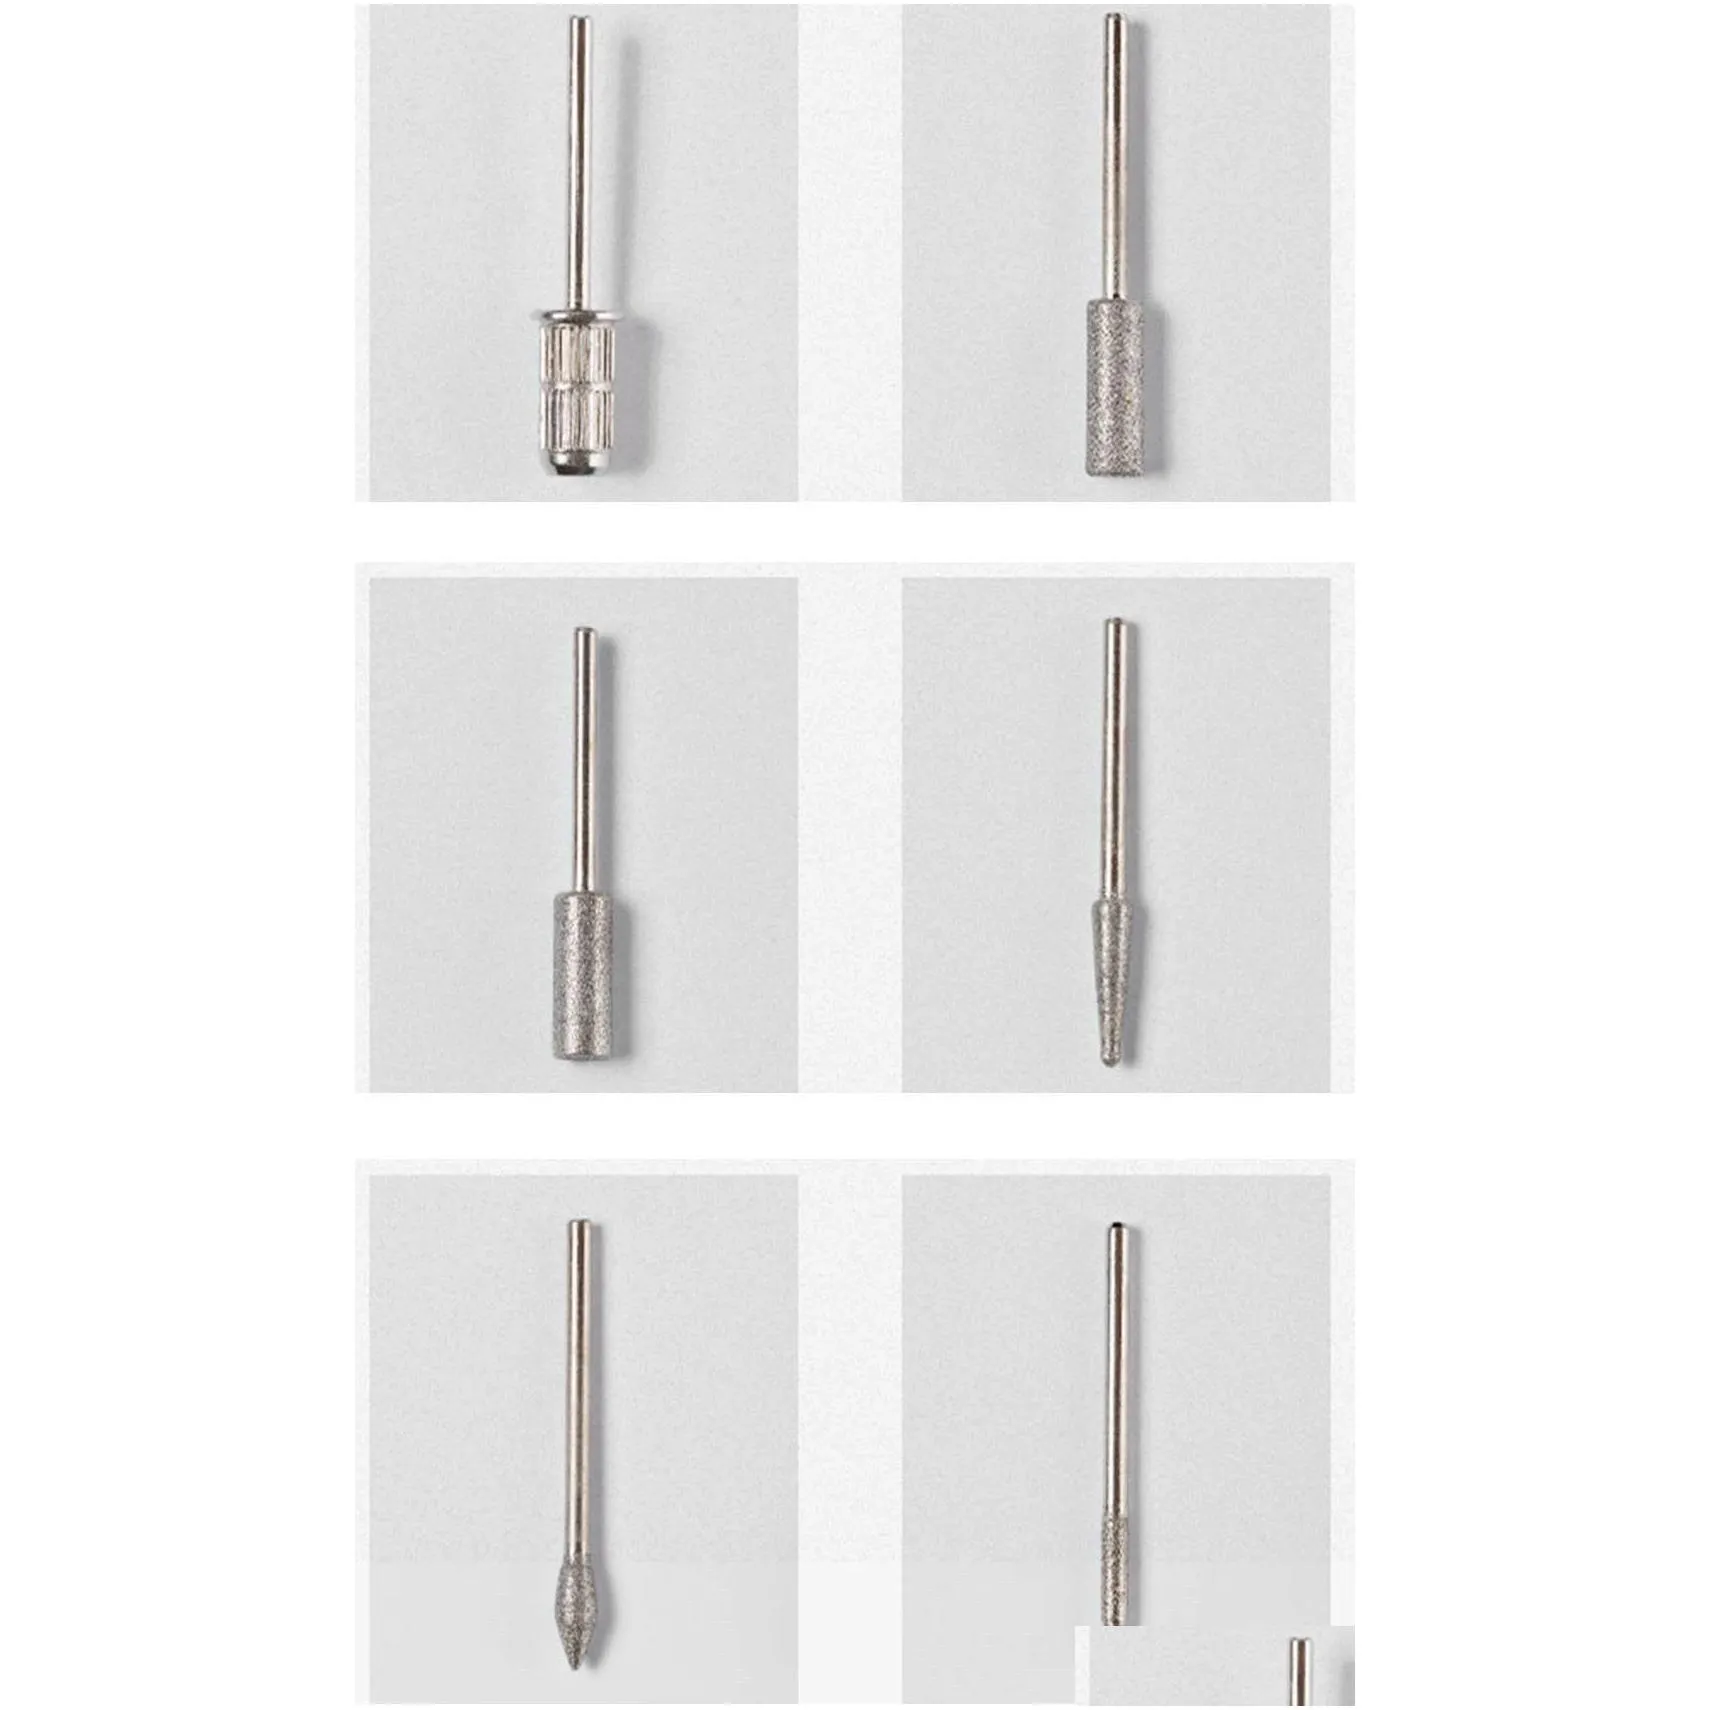 nail polisher electric nail drill manicure set file grey nail pen machine set kit with eu plug free shipping